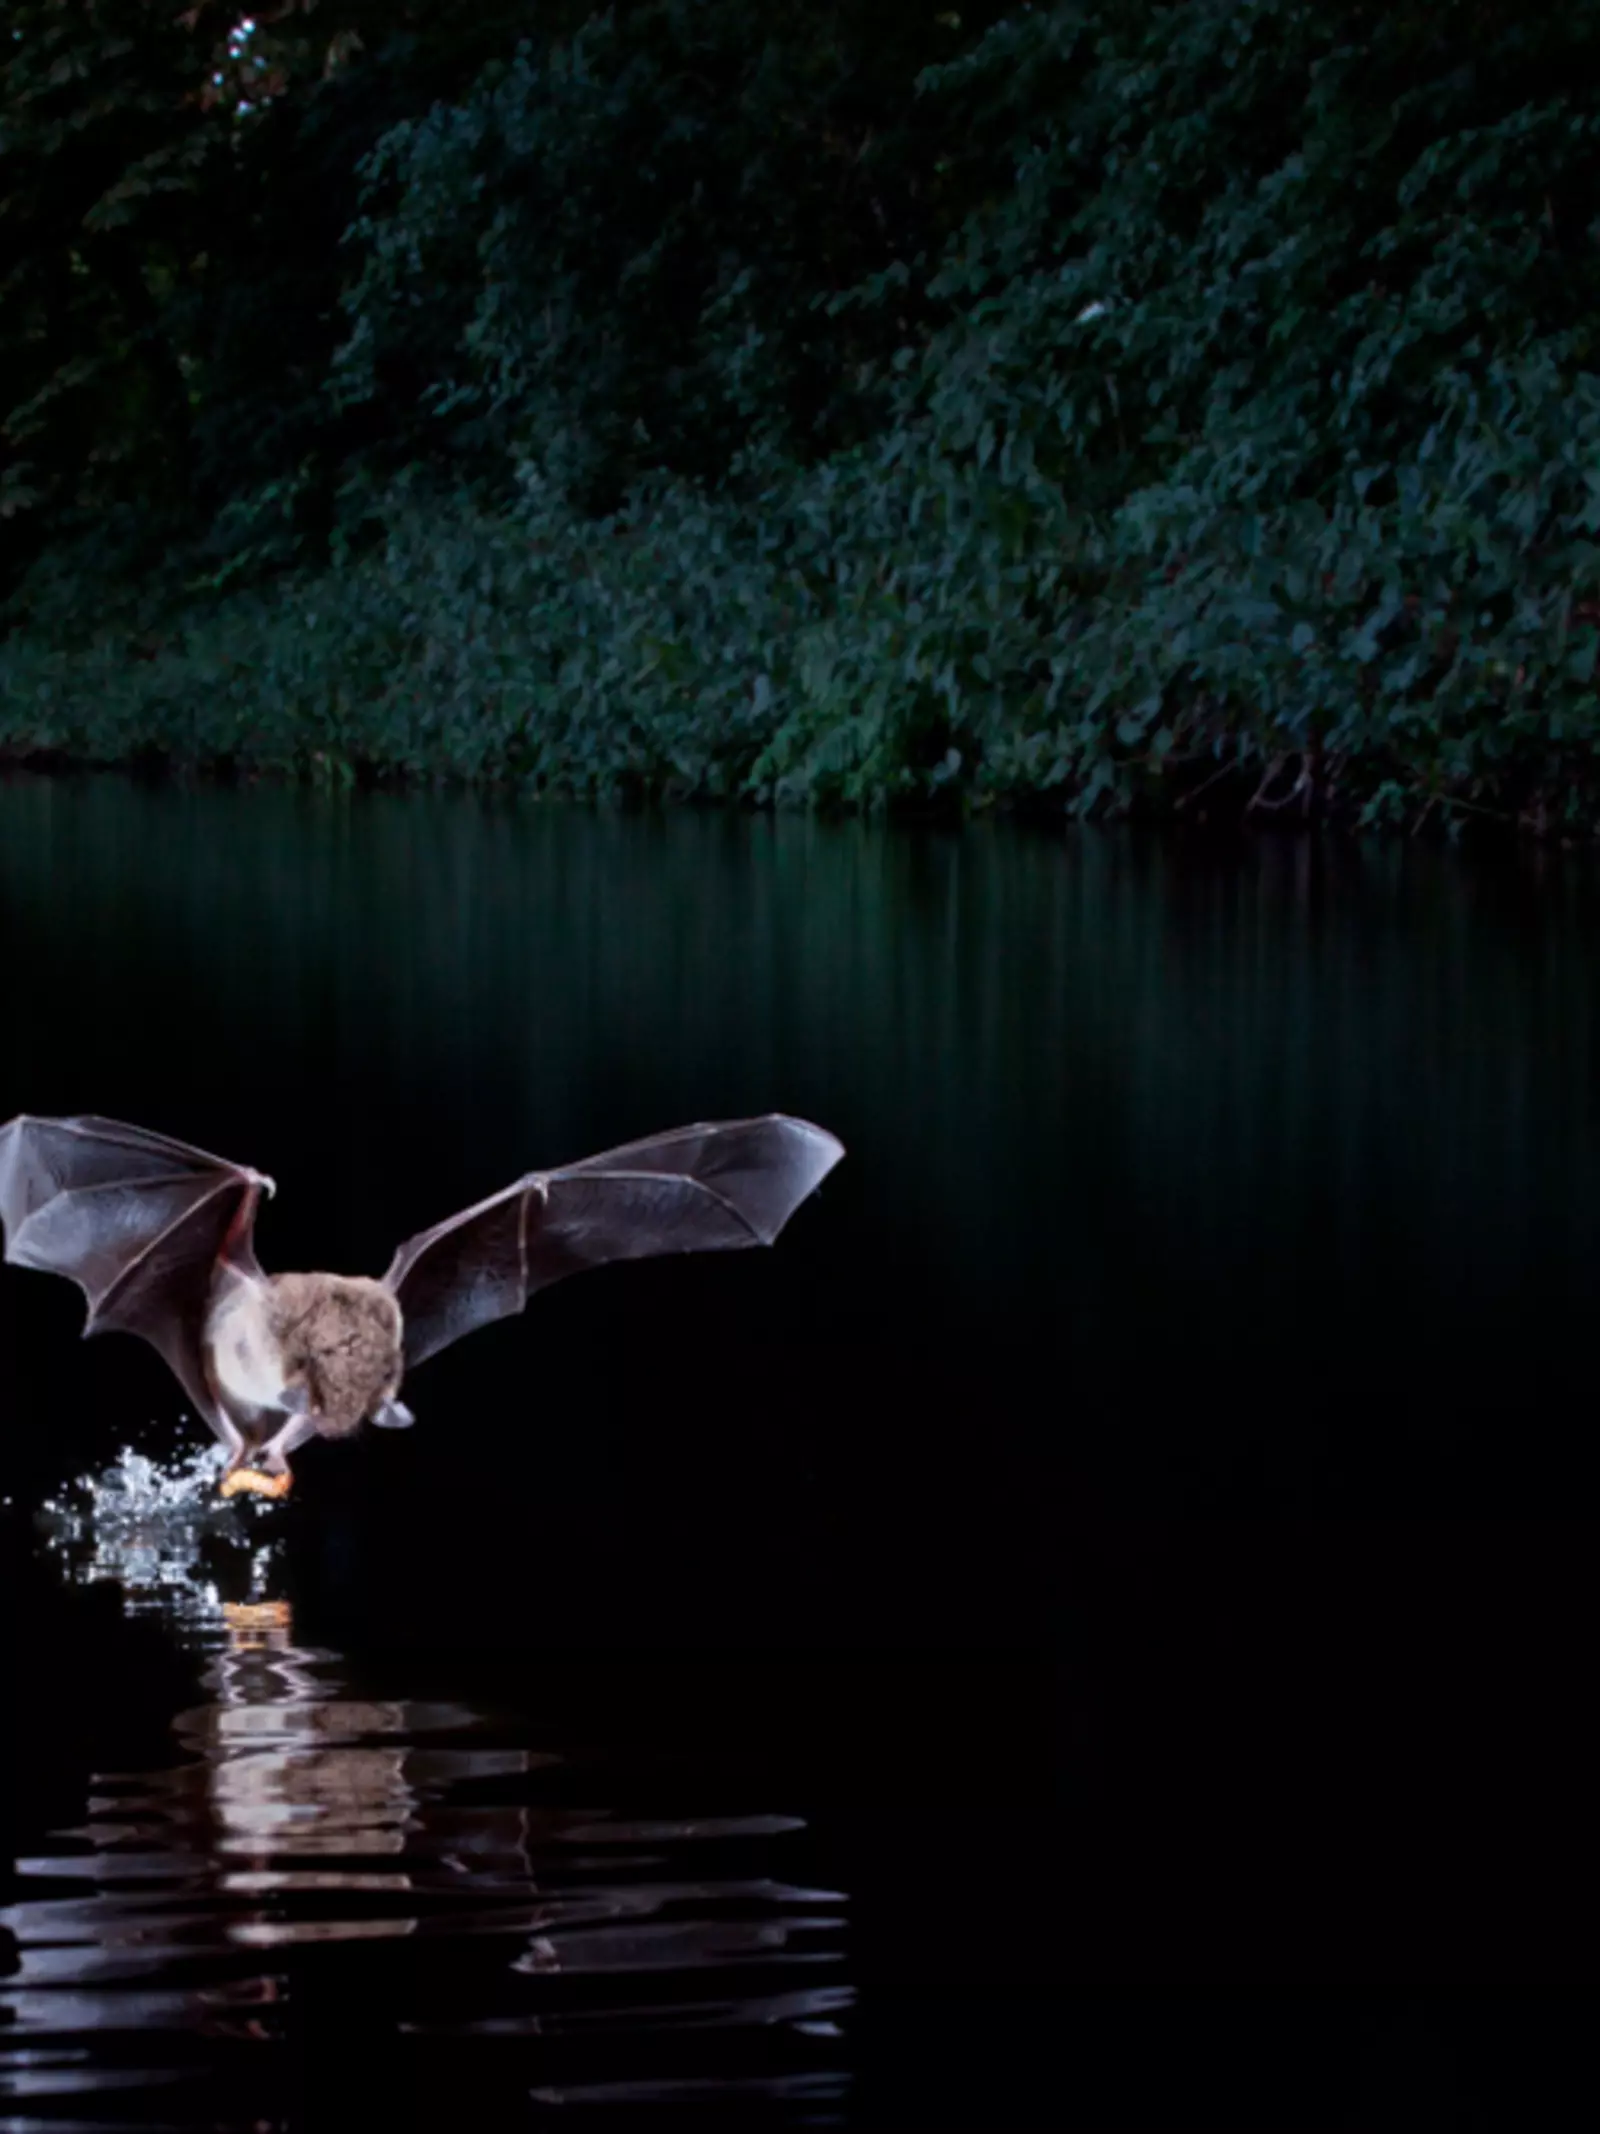 Daubenton's bat skimming water for insects.